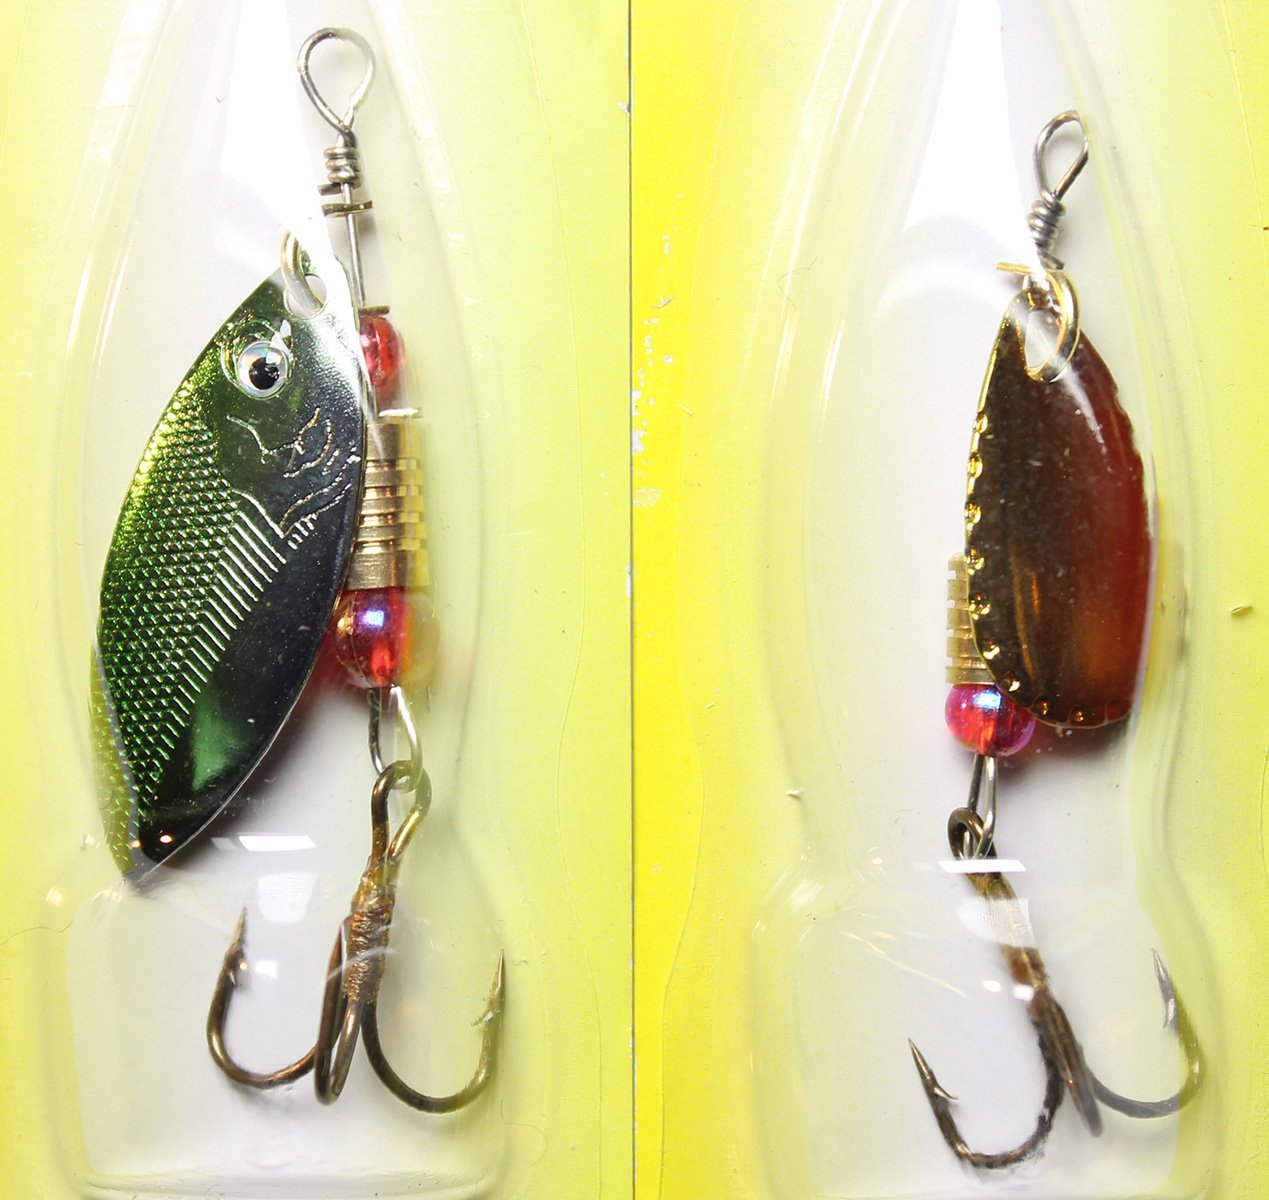 manufactured fishing lure